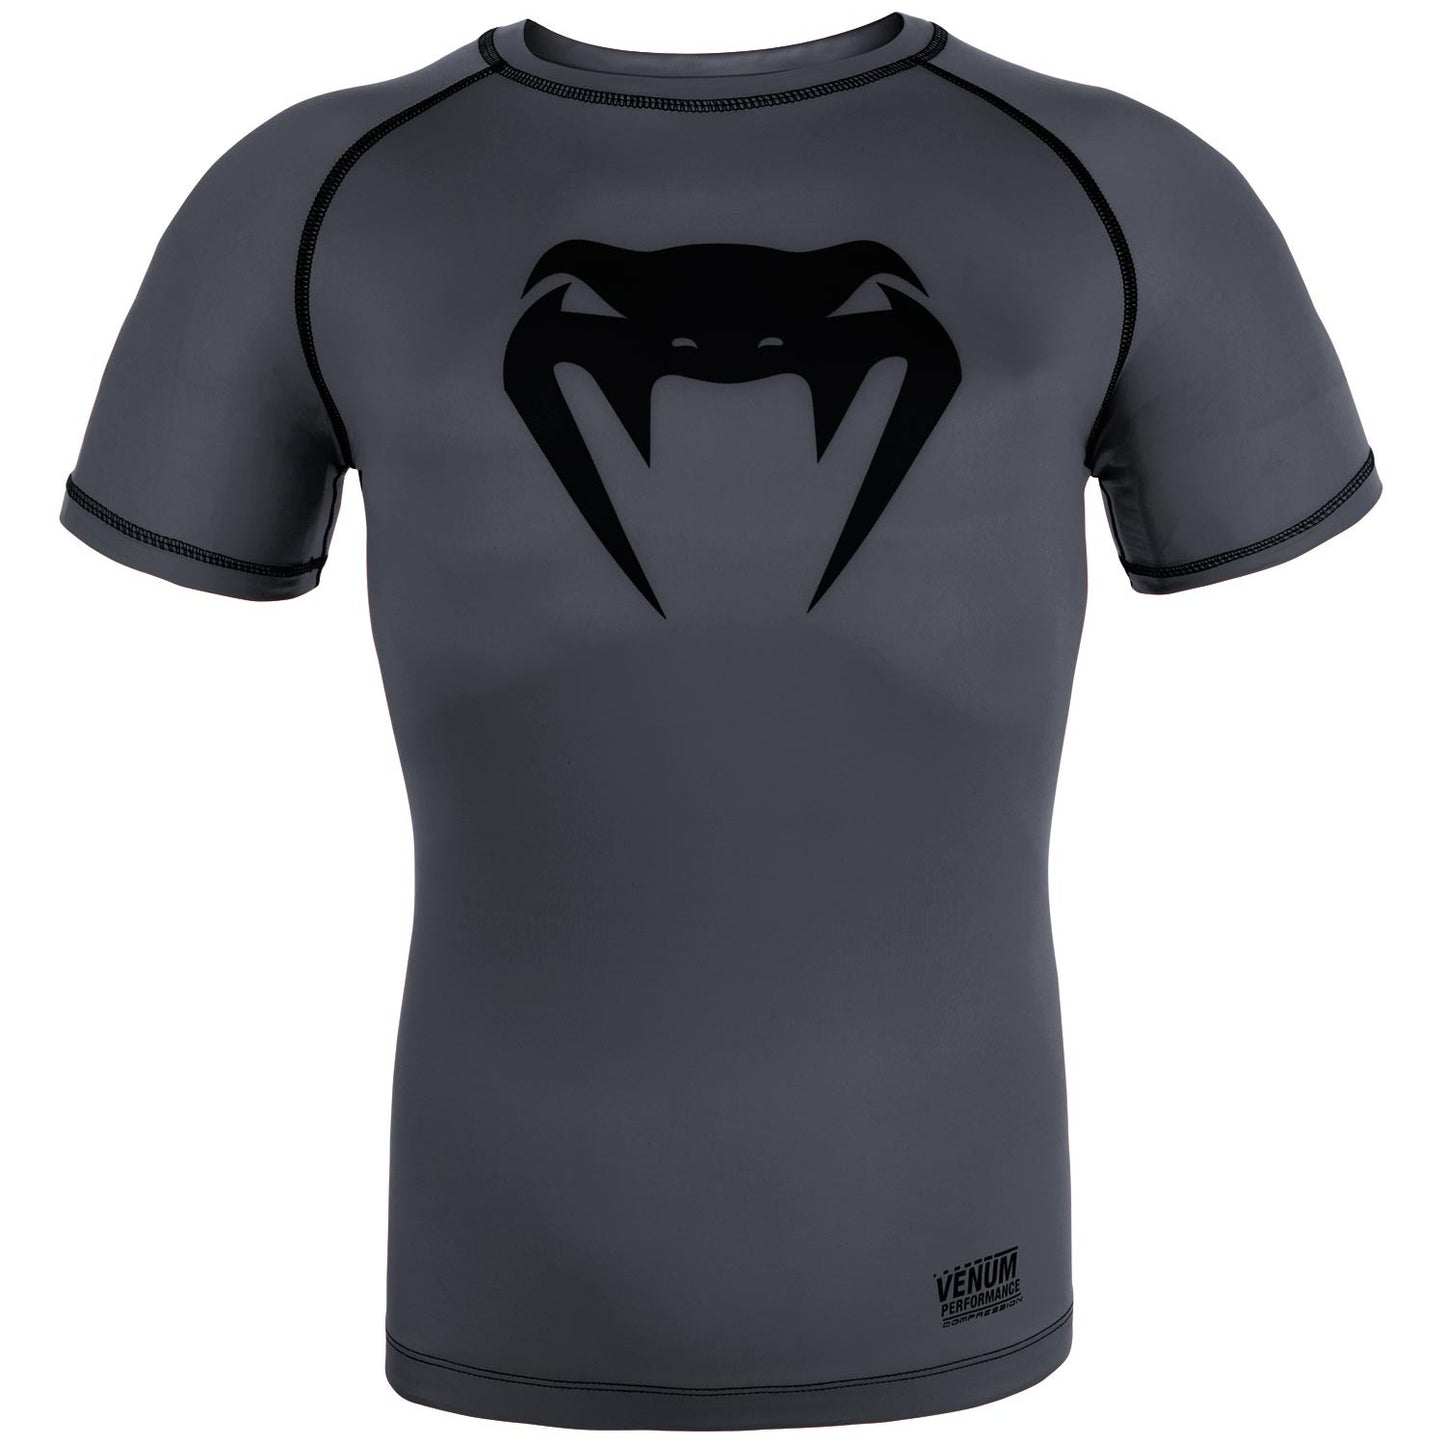 Venum Contender 3.0 Compression T-shirt - Short Sleeves - Heather Grey/Black